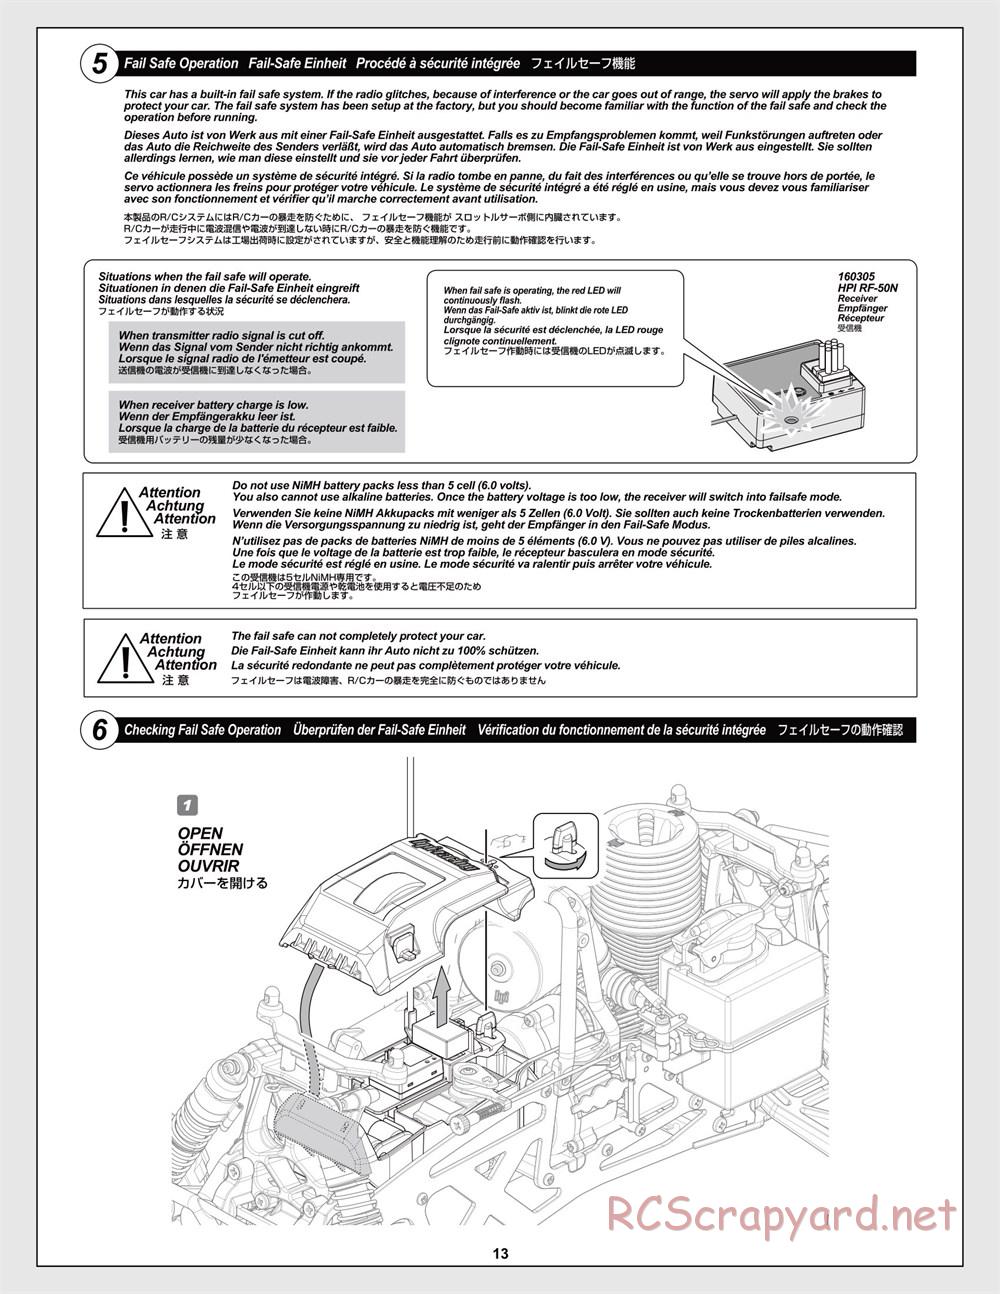 HPI - Savage XL 5.9 - Manual - Page 13